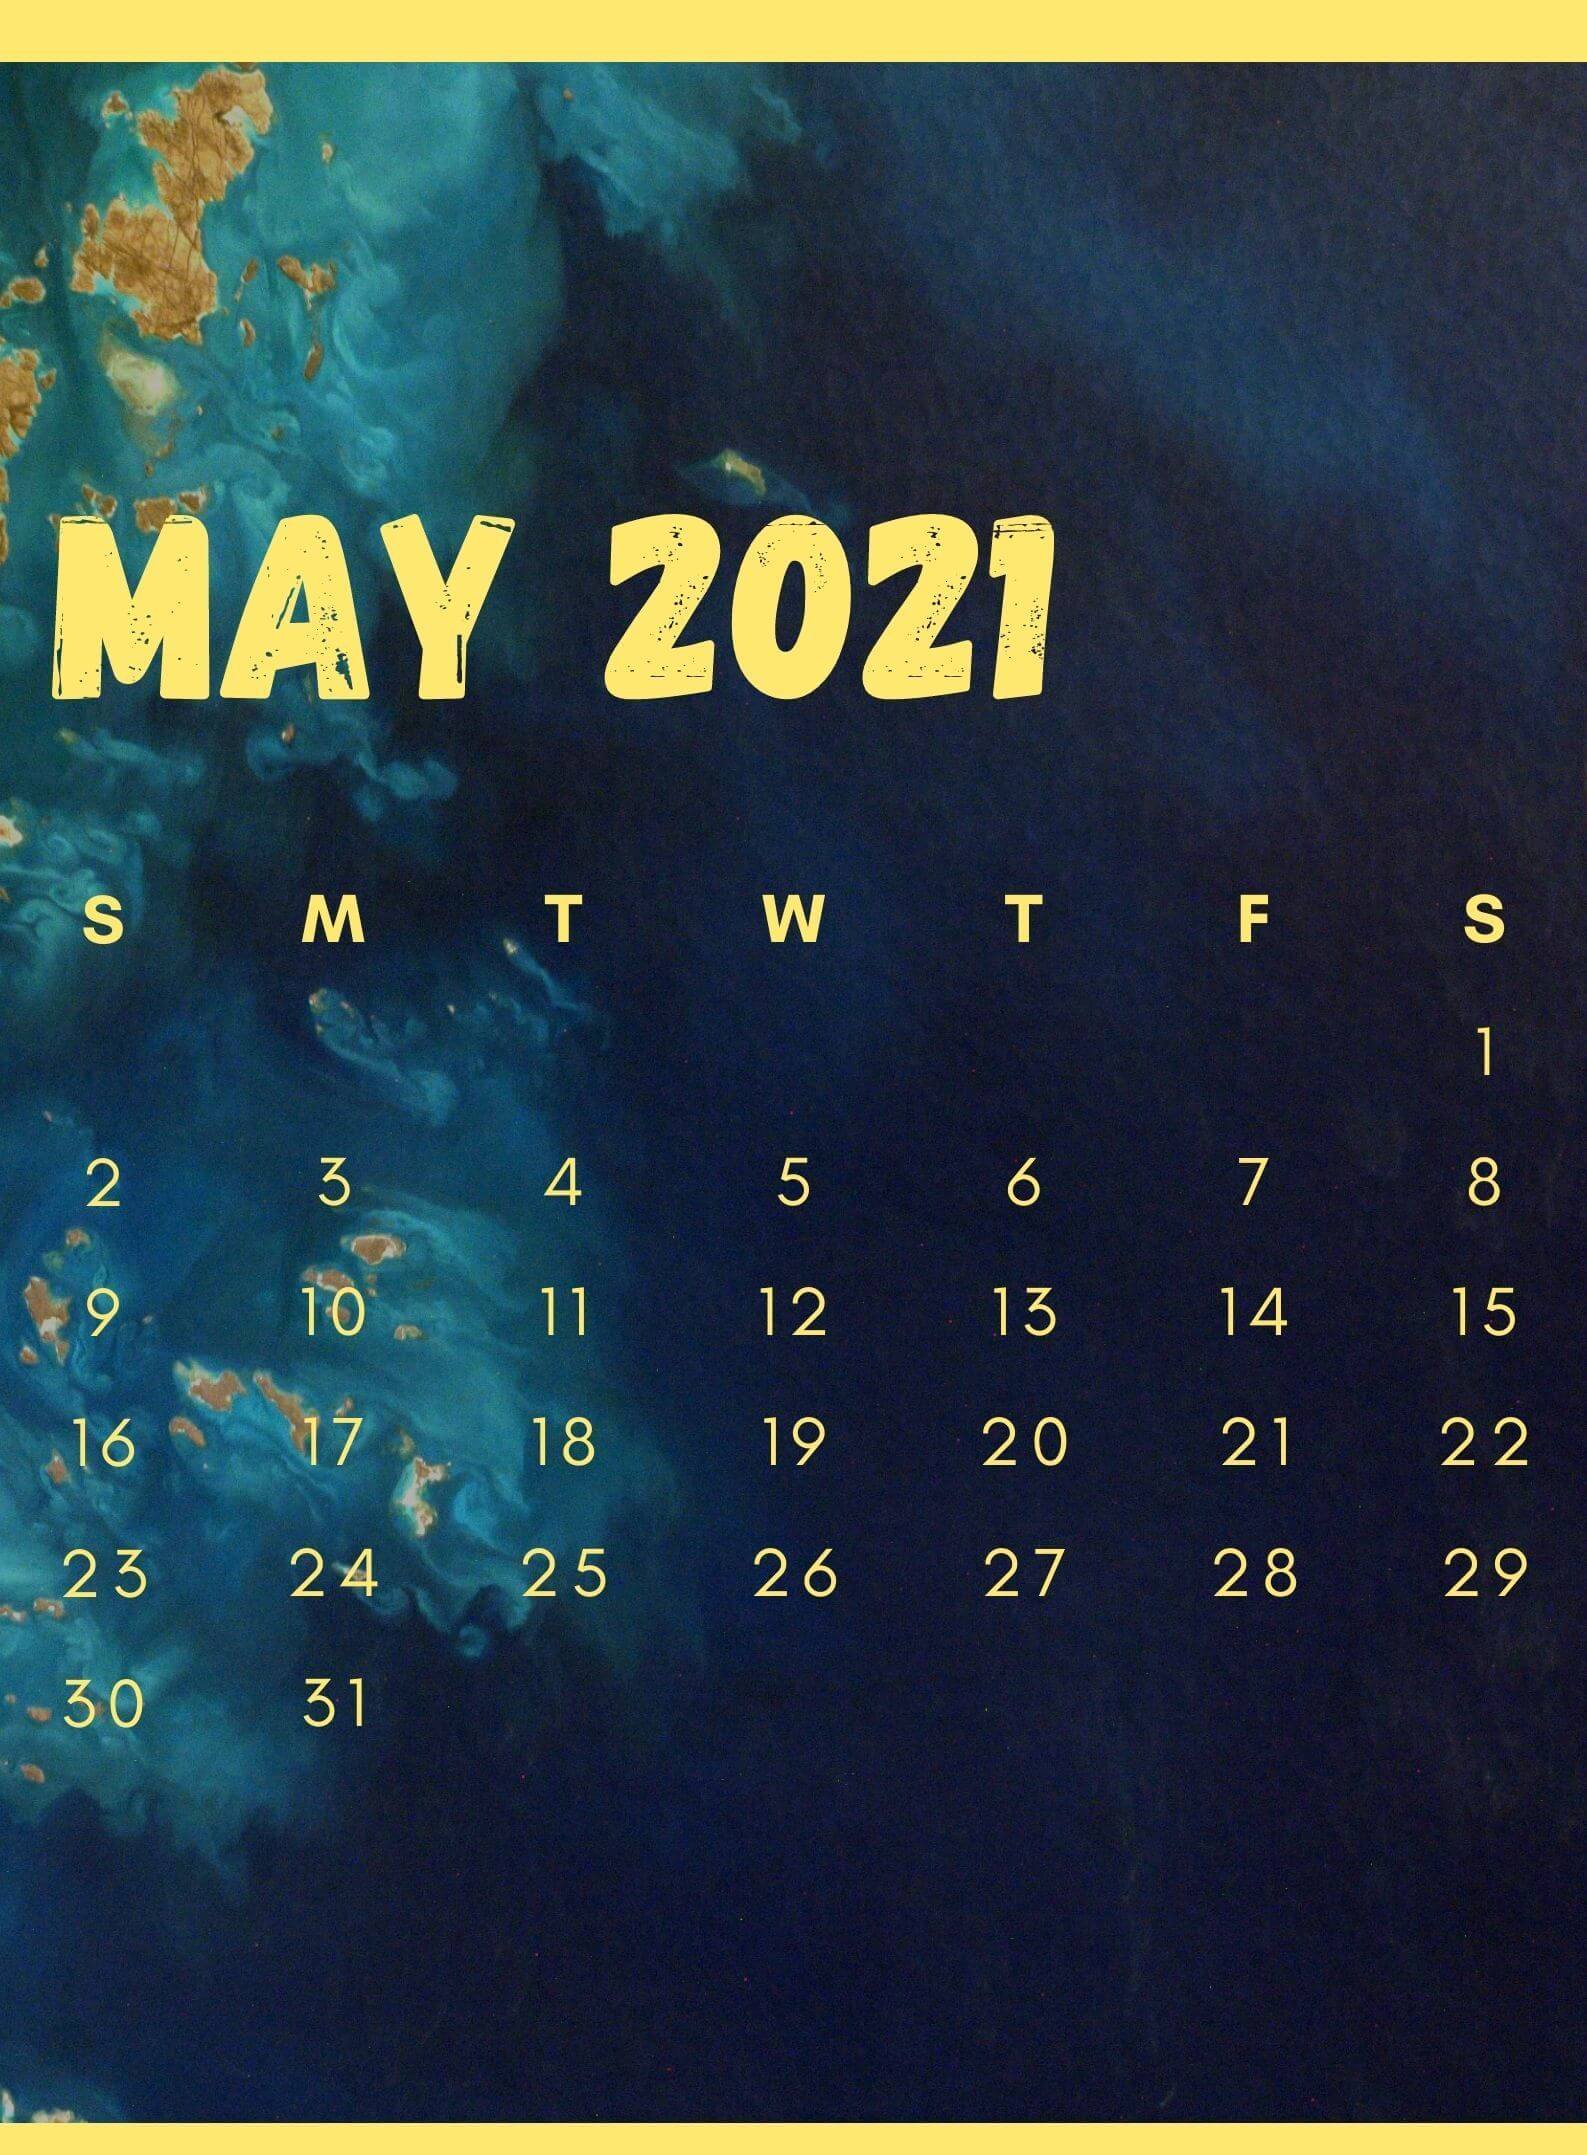 May 2021 iPhone Calendar Wallpaper